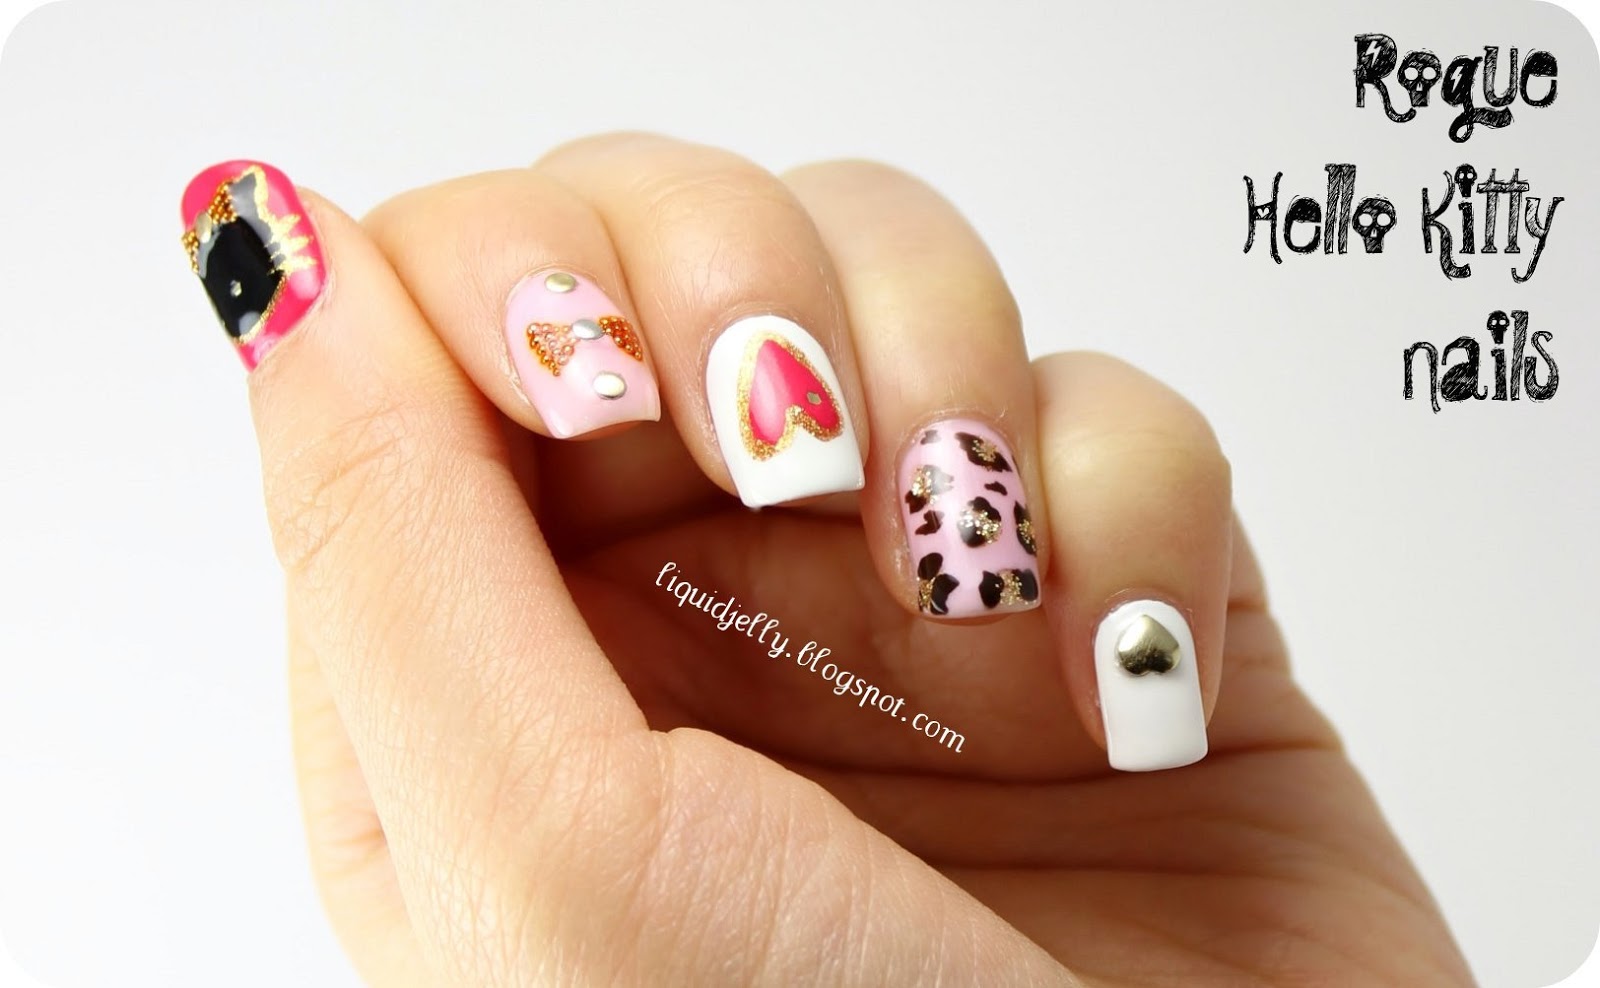 8. Hello Kitty Nail Art with Rhinestones - wide 8